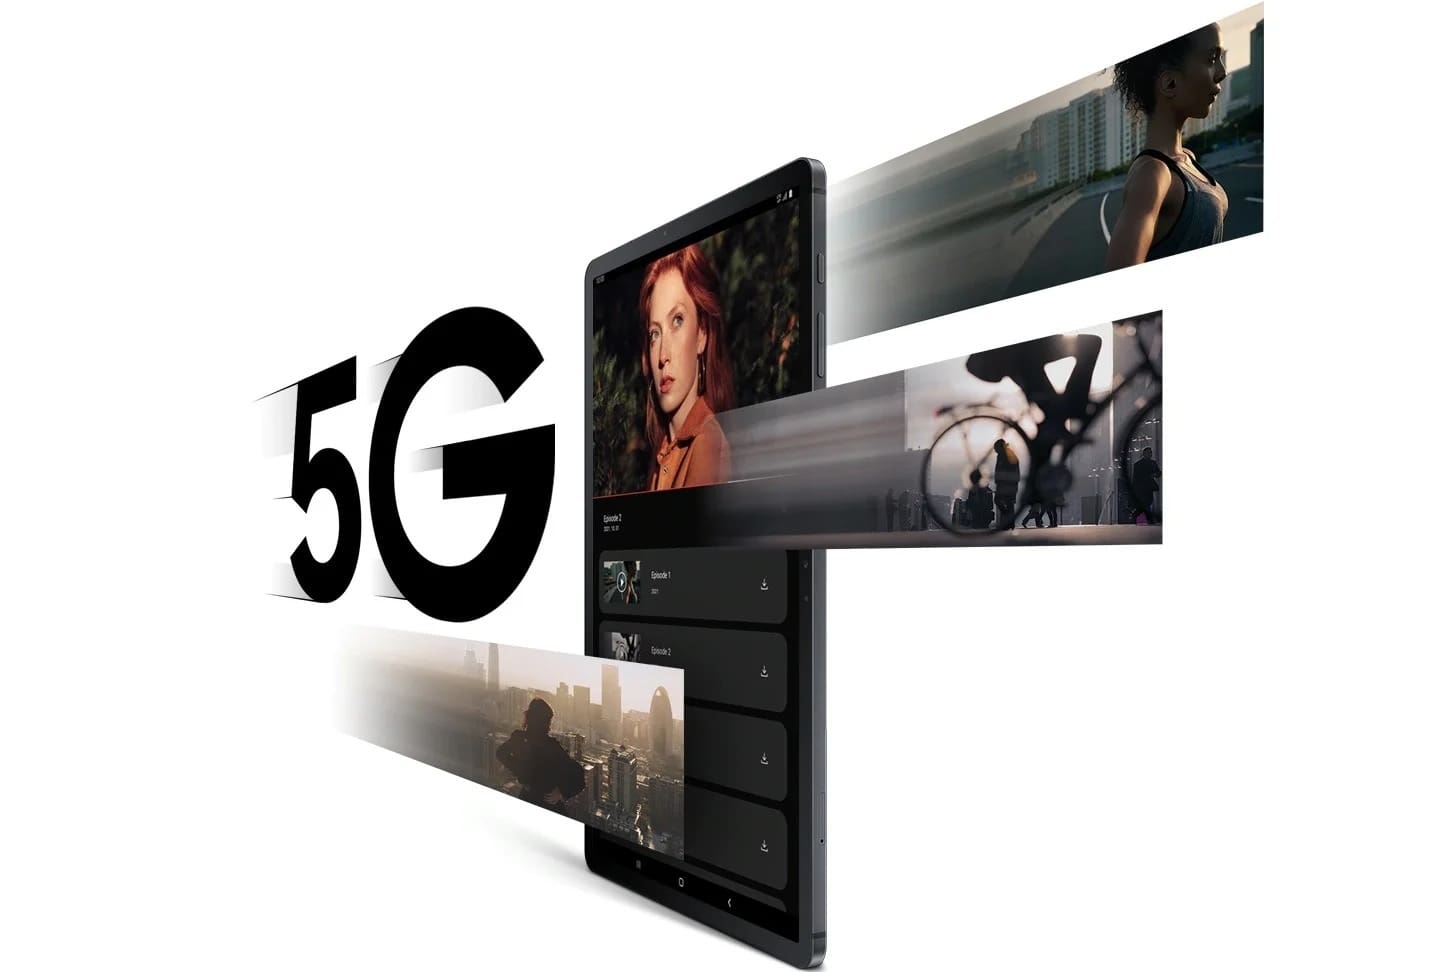 5G trên Galaxy Tab S7 FE 5G